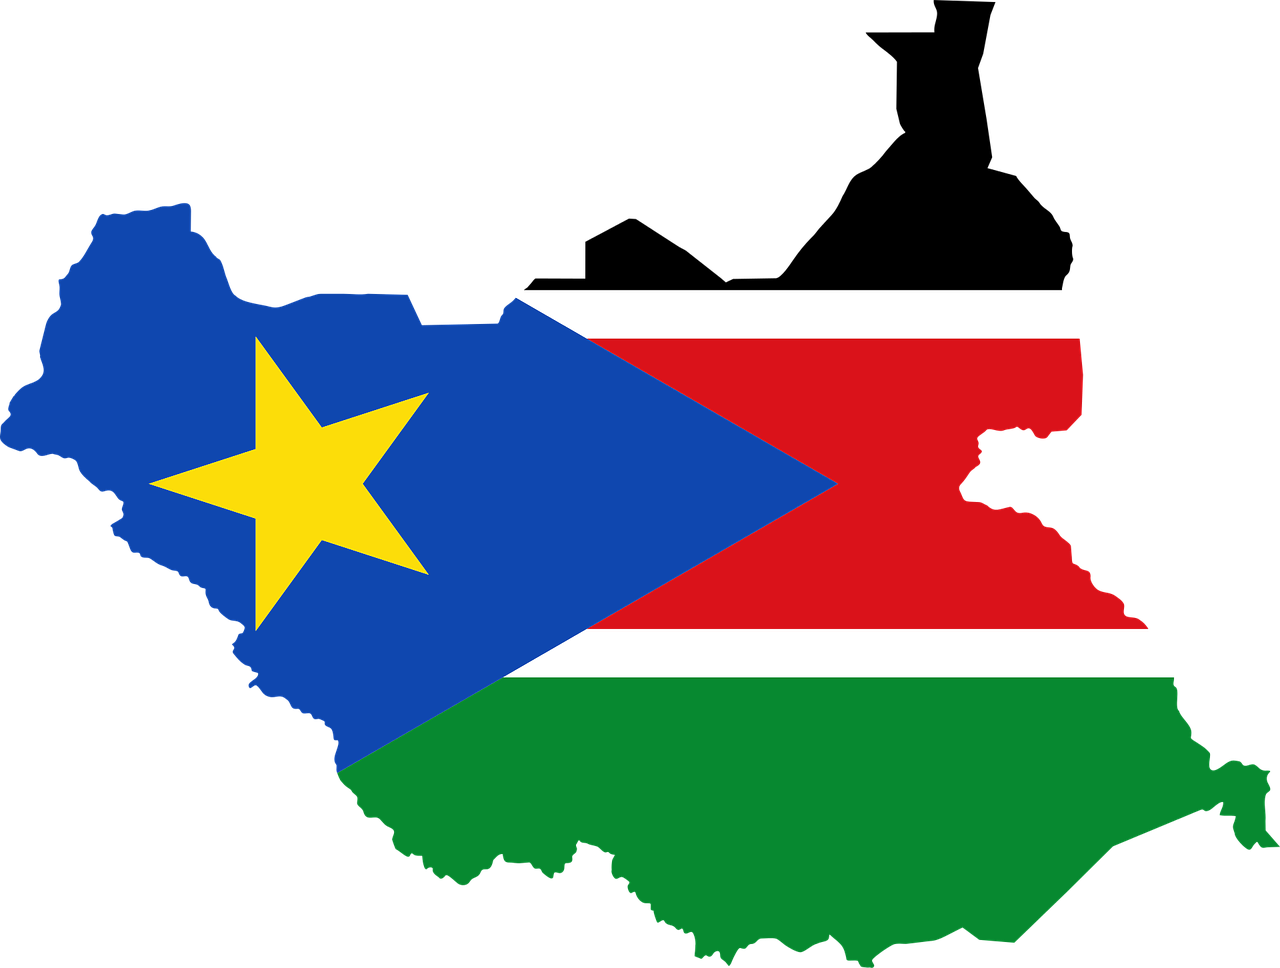 Flag and outline of South Sudan (photo credit: Gordon Johnson via pixabay)